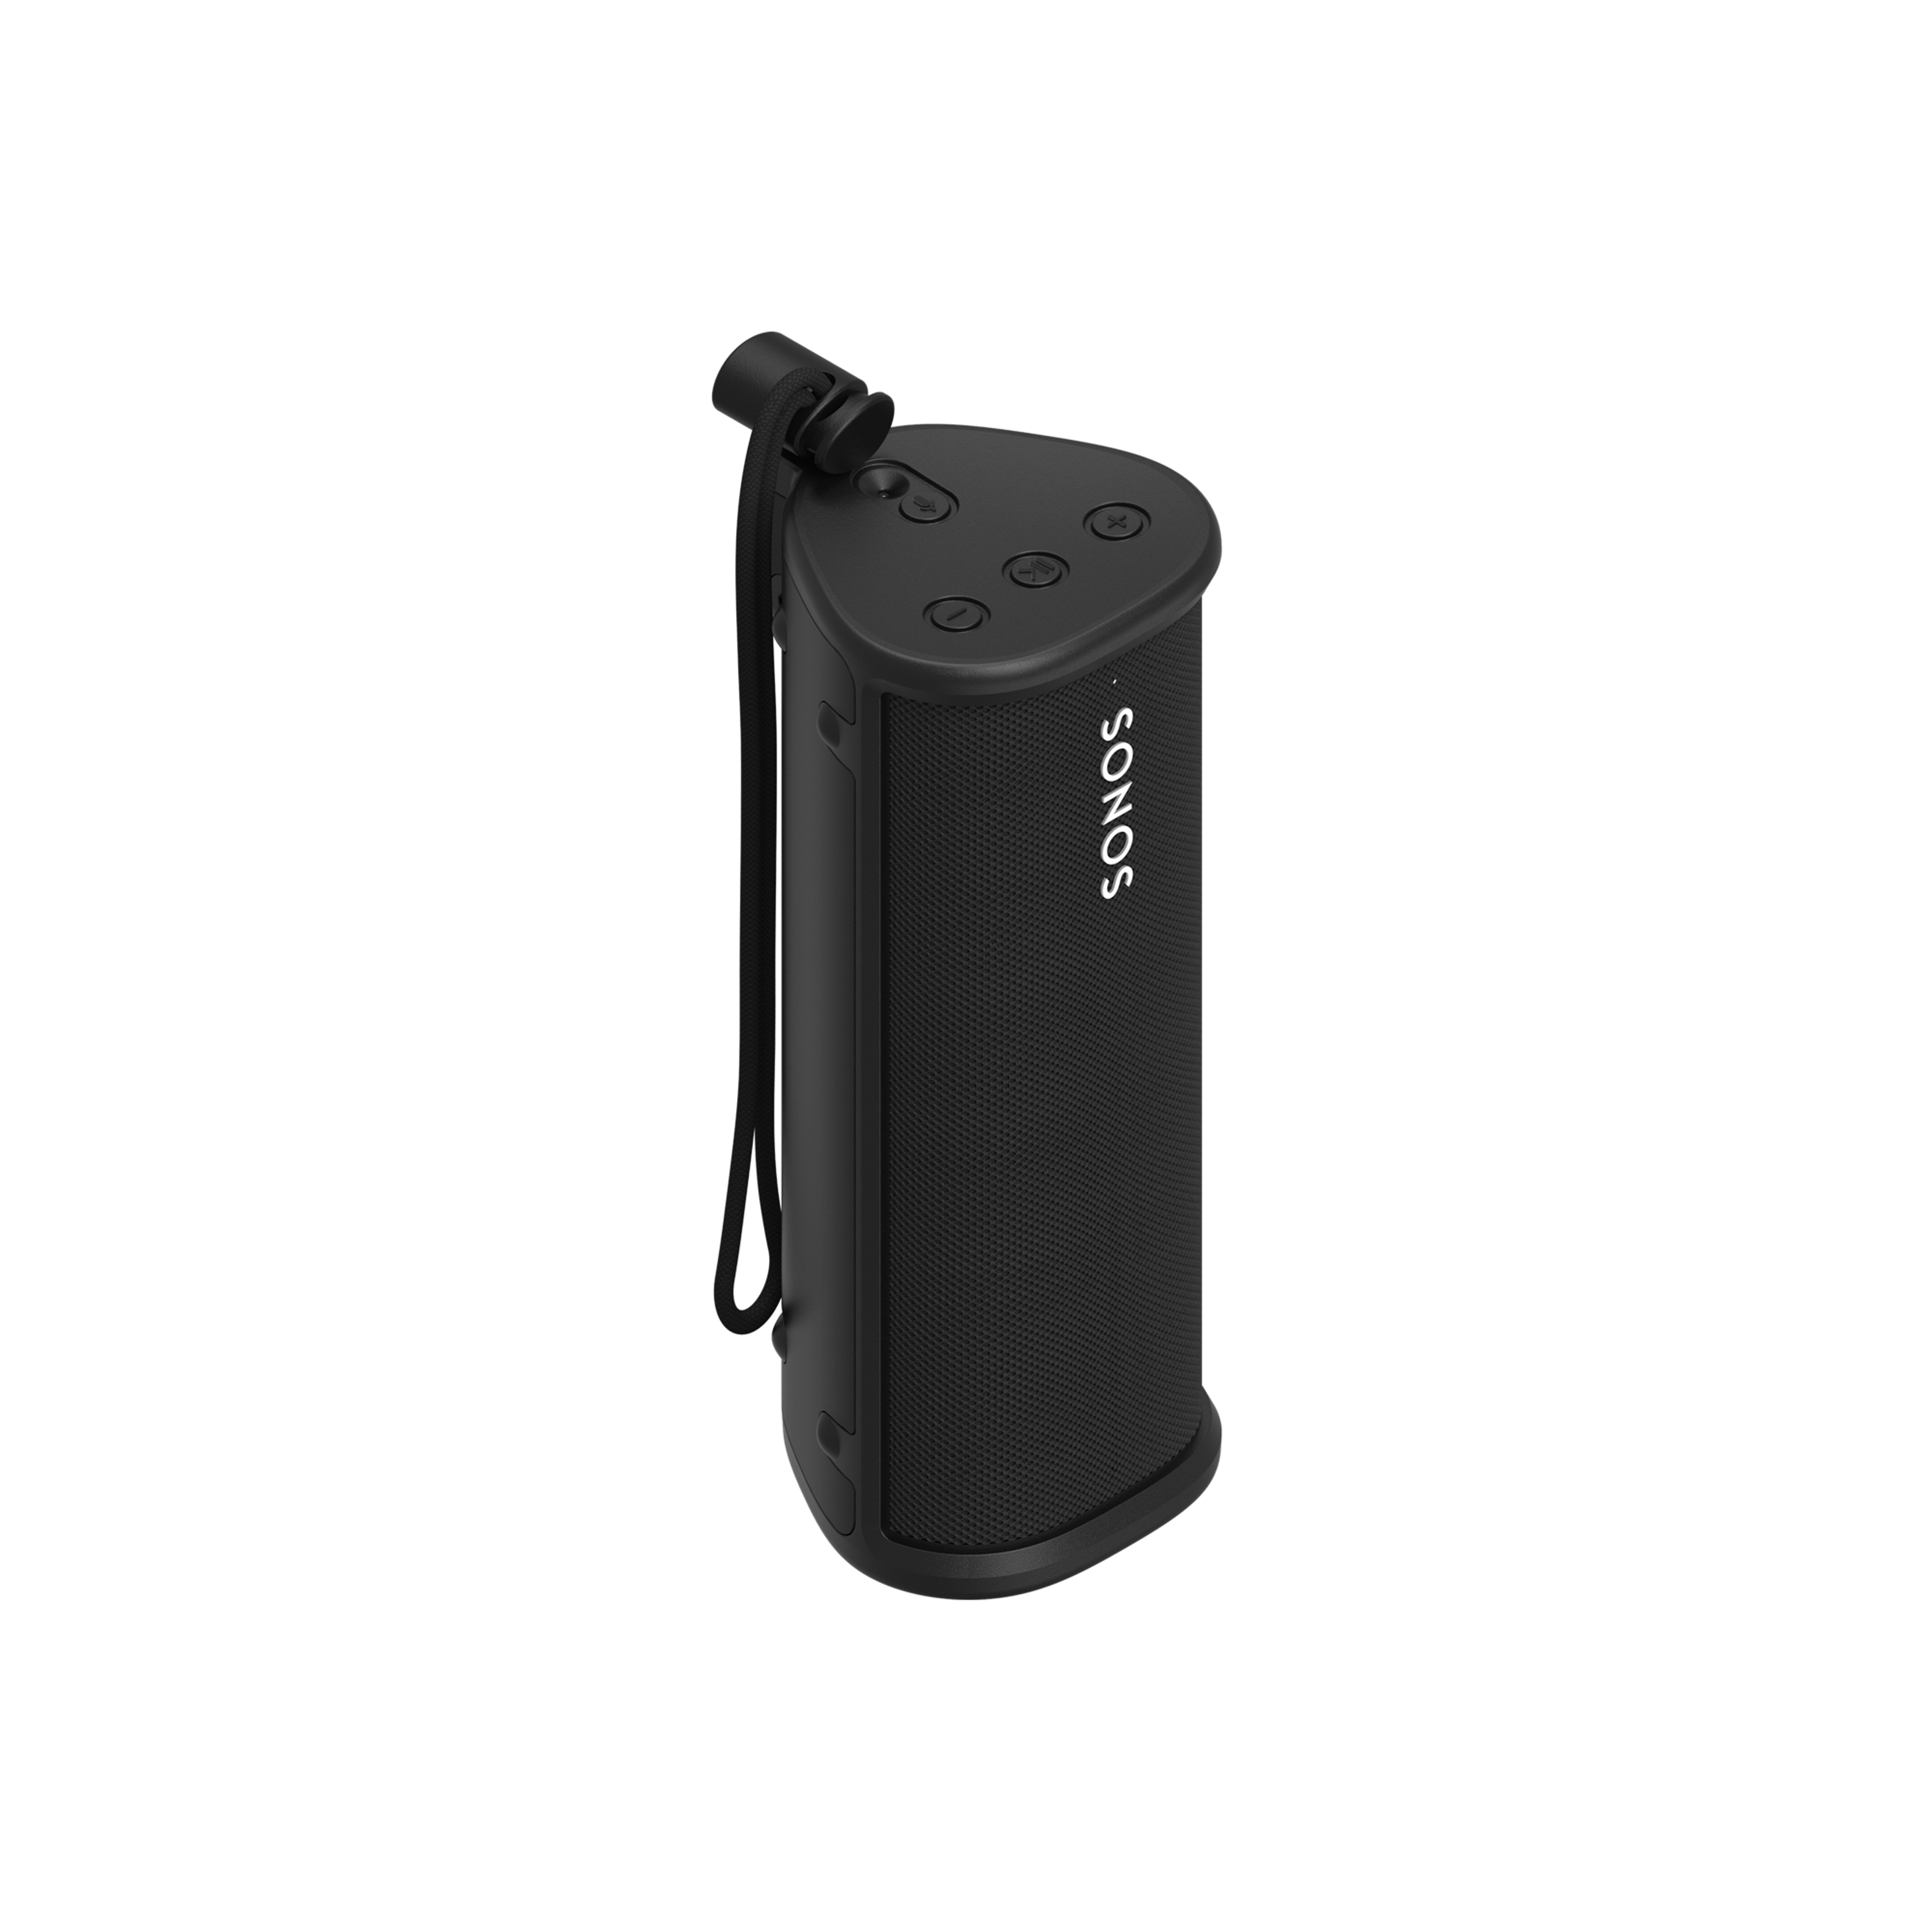 Image of a black OtterBox Sonos Roam case holding a black Sonos Roam